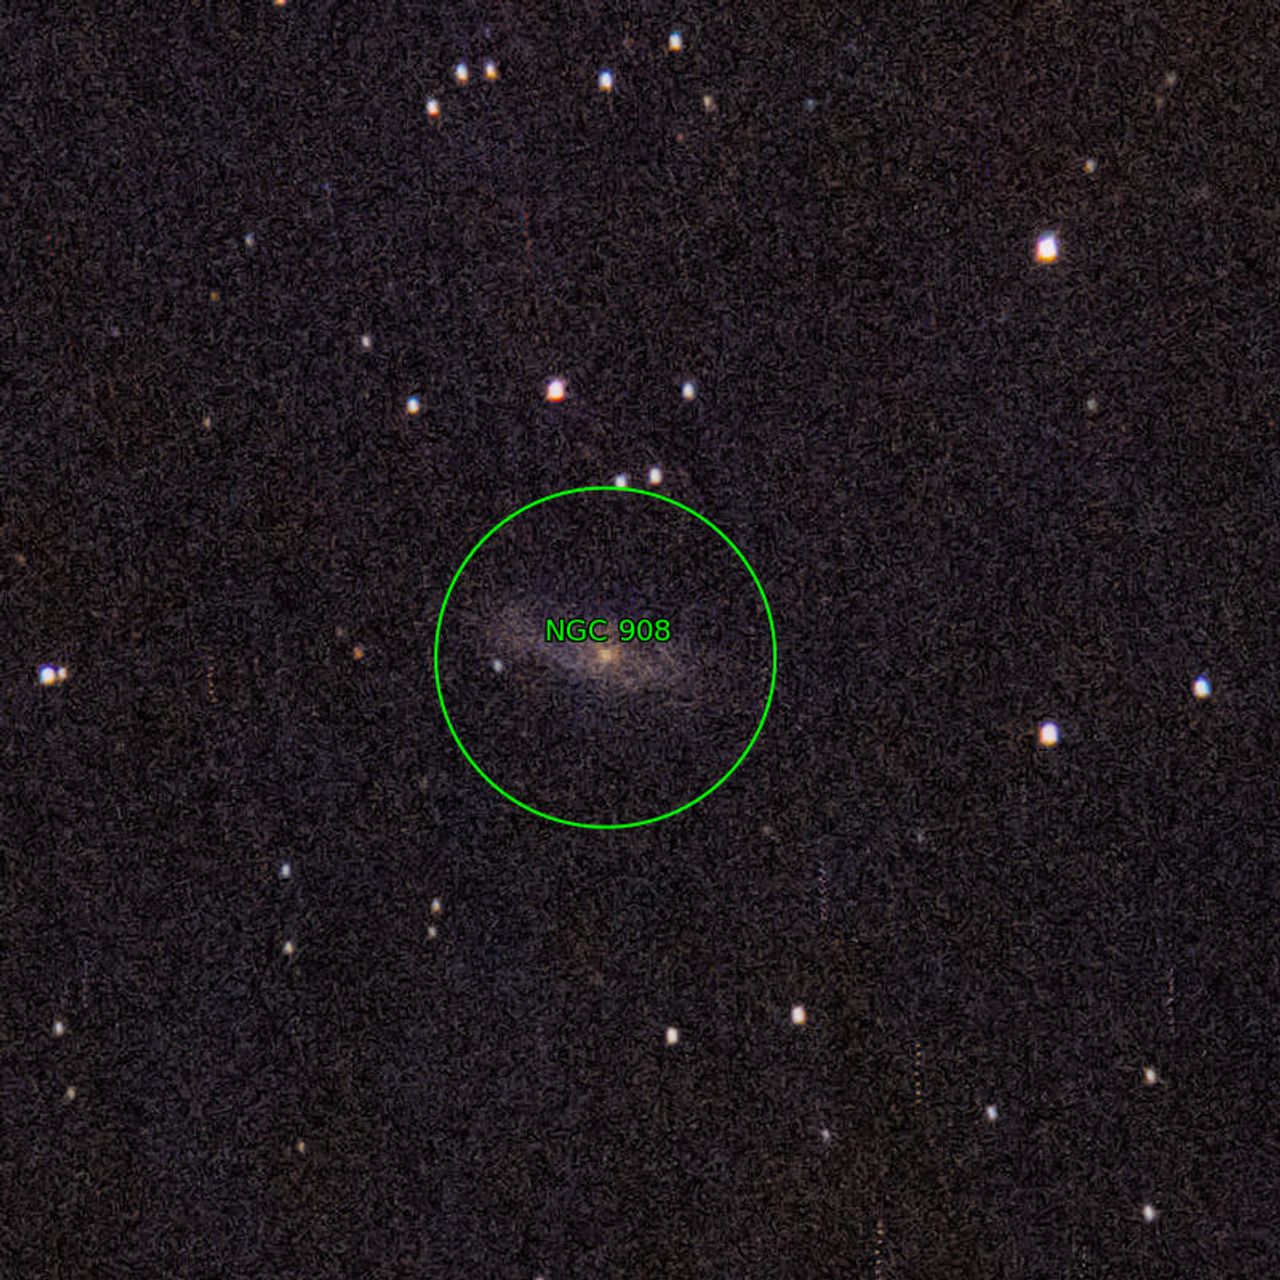 Annotation around NGC908